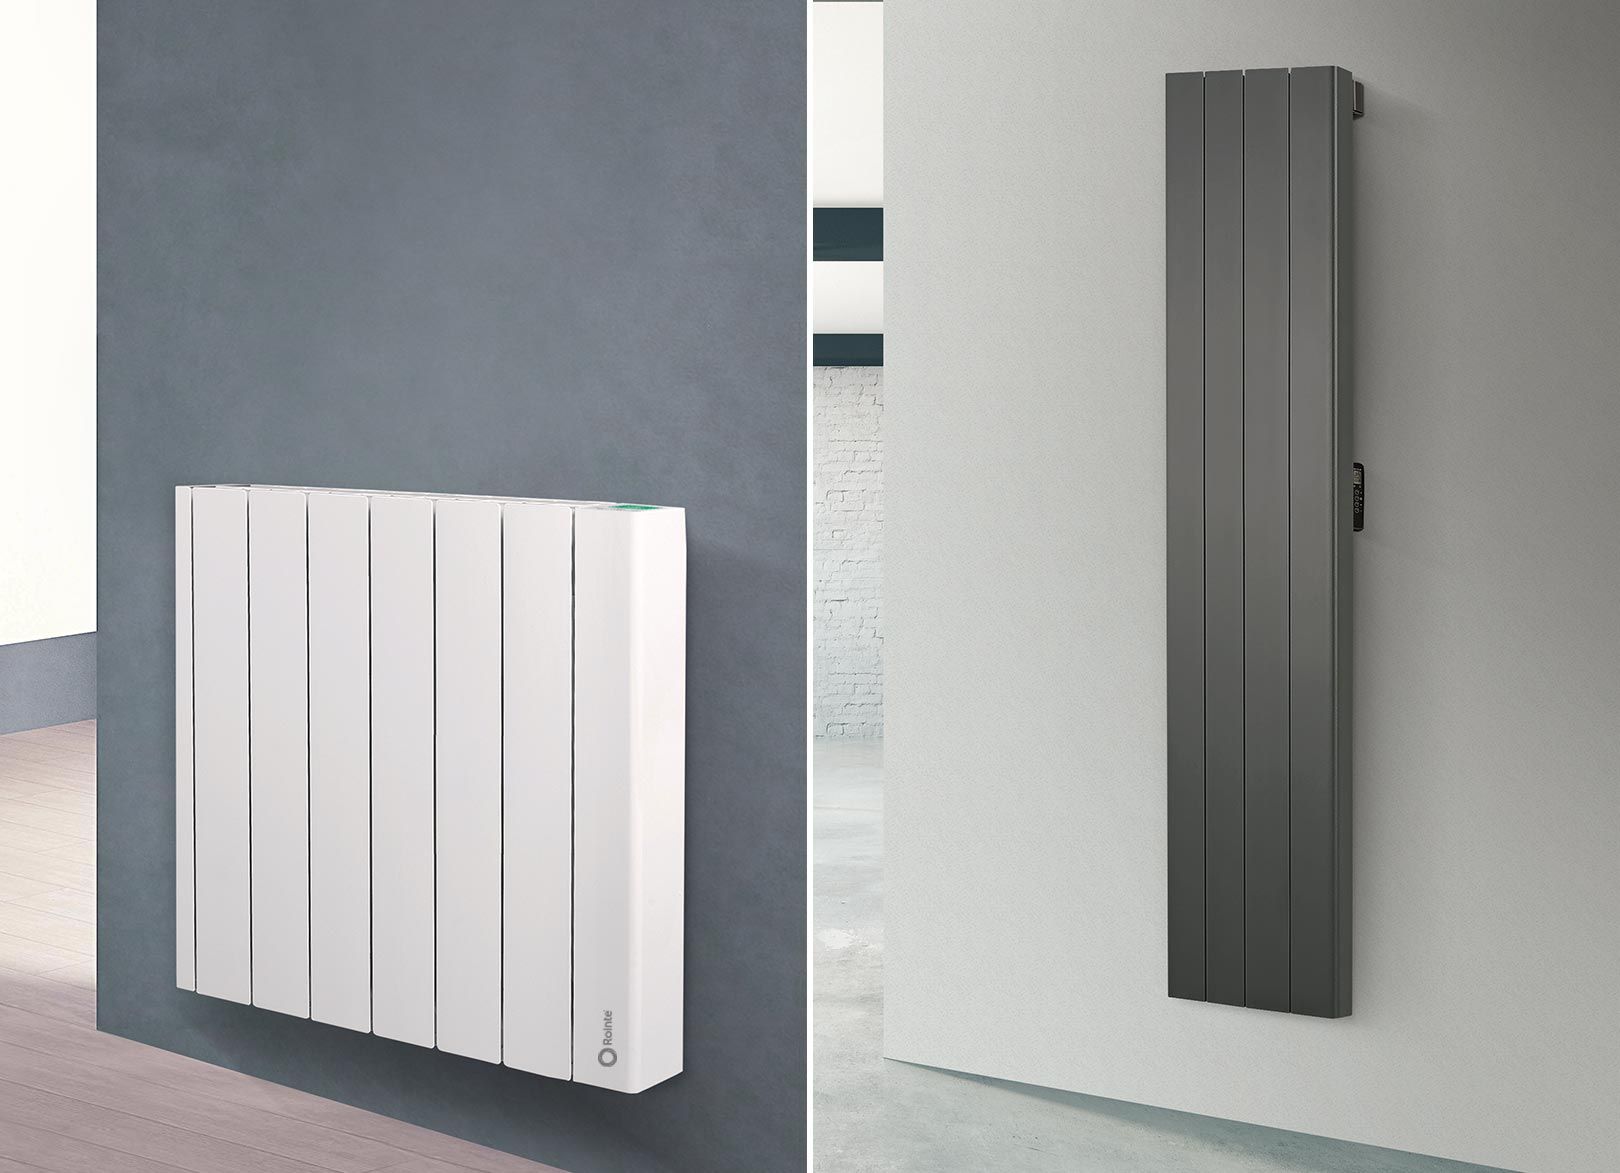 Rointe heating presents its new range of electric radiators